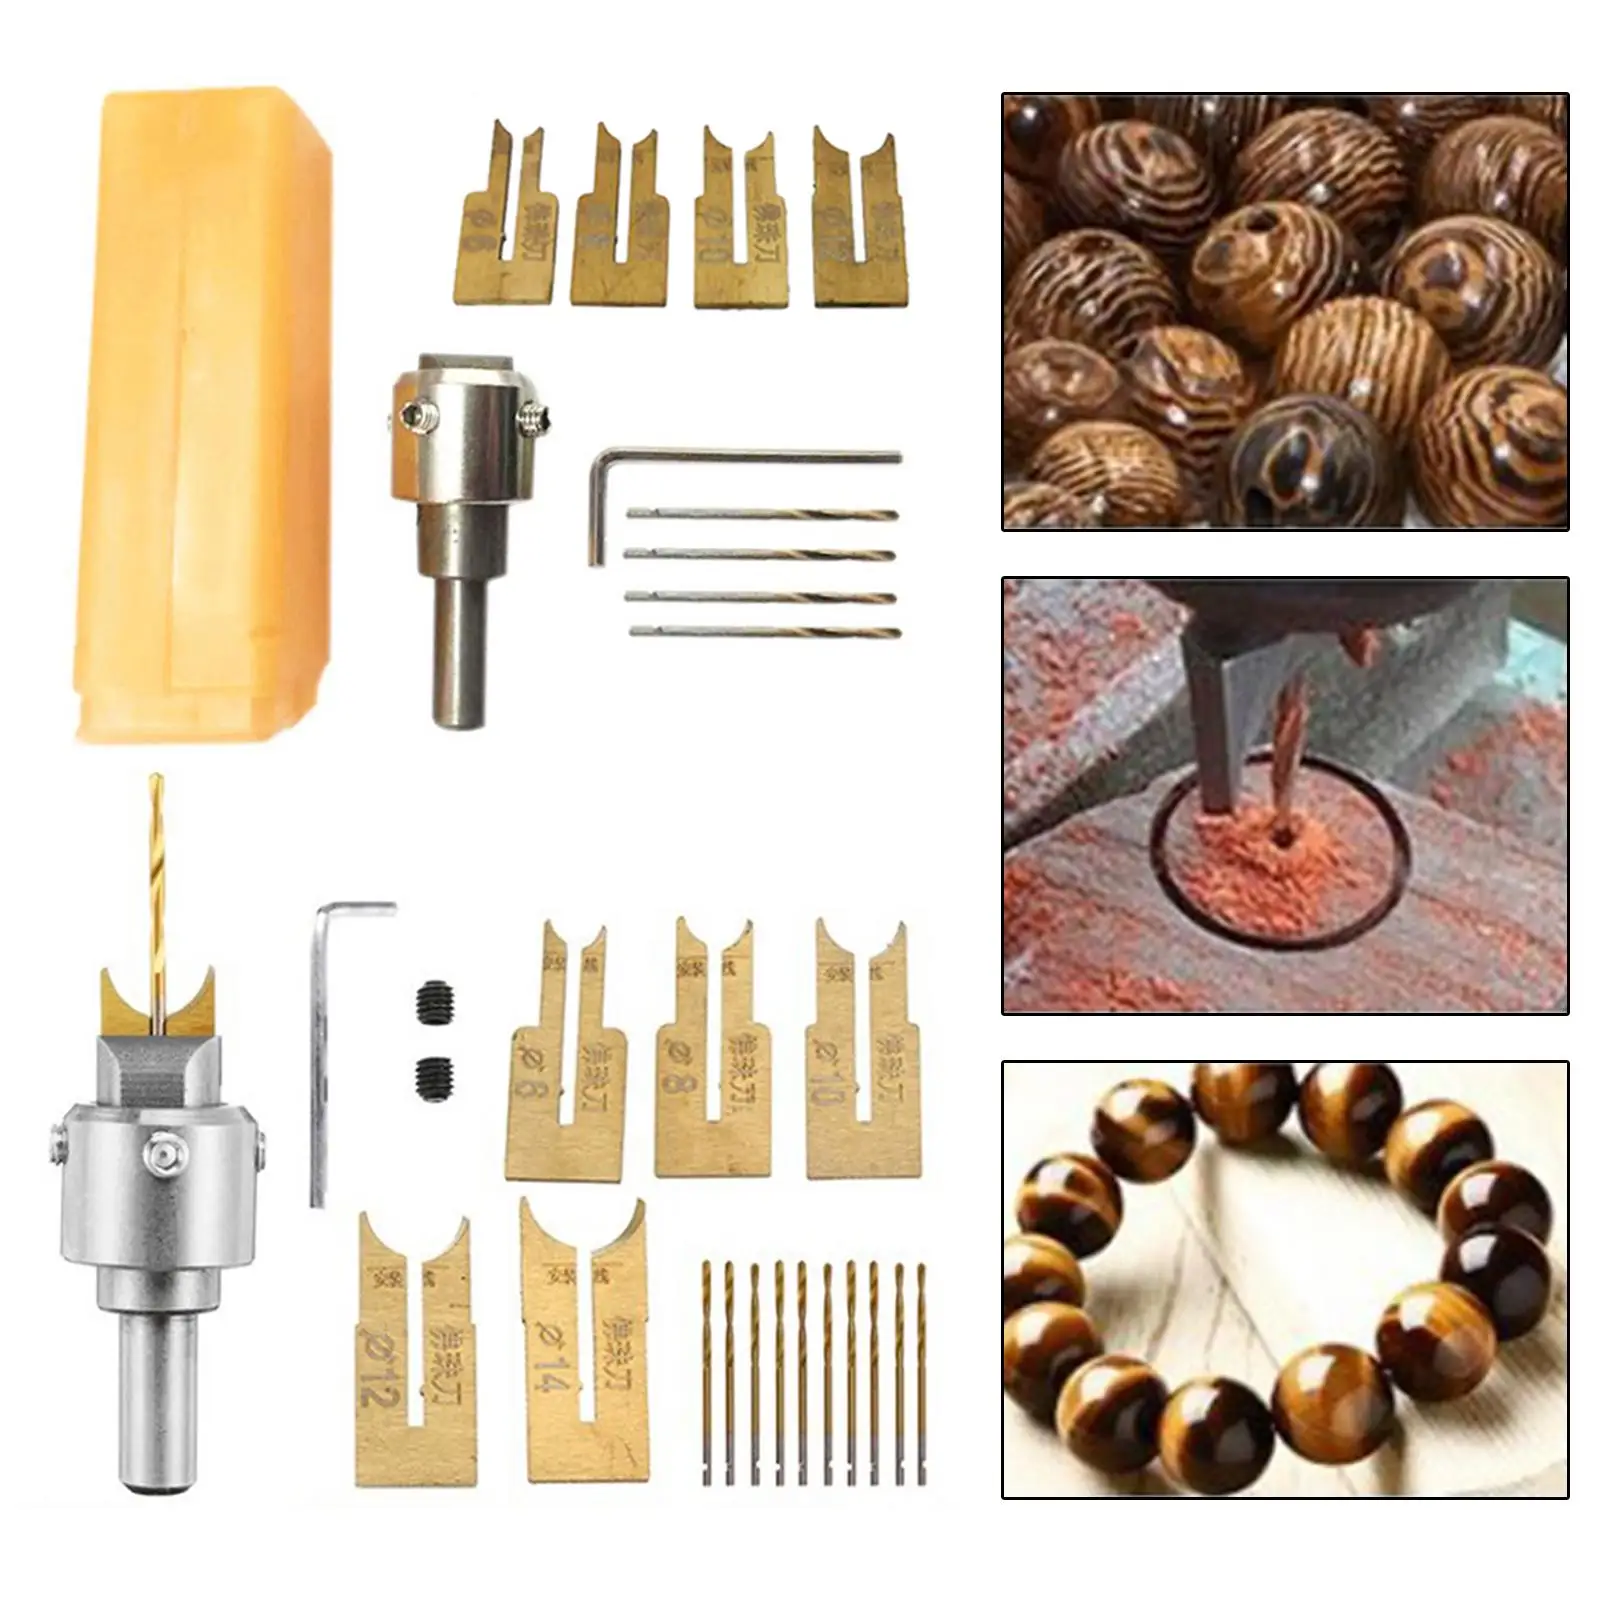 Titanium Alloy Buddha Beads Drill Bit Joinery Bits Jewelry Making 6/8/10/12/14mm Wood Bead Maker Router Bit for Ebony